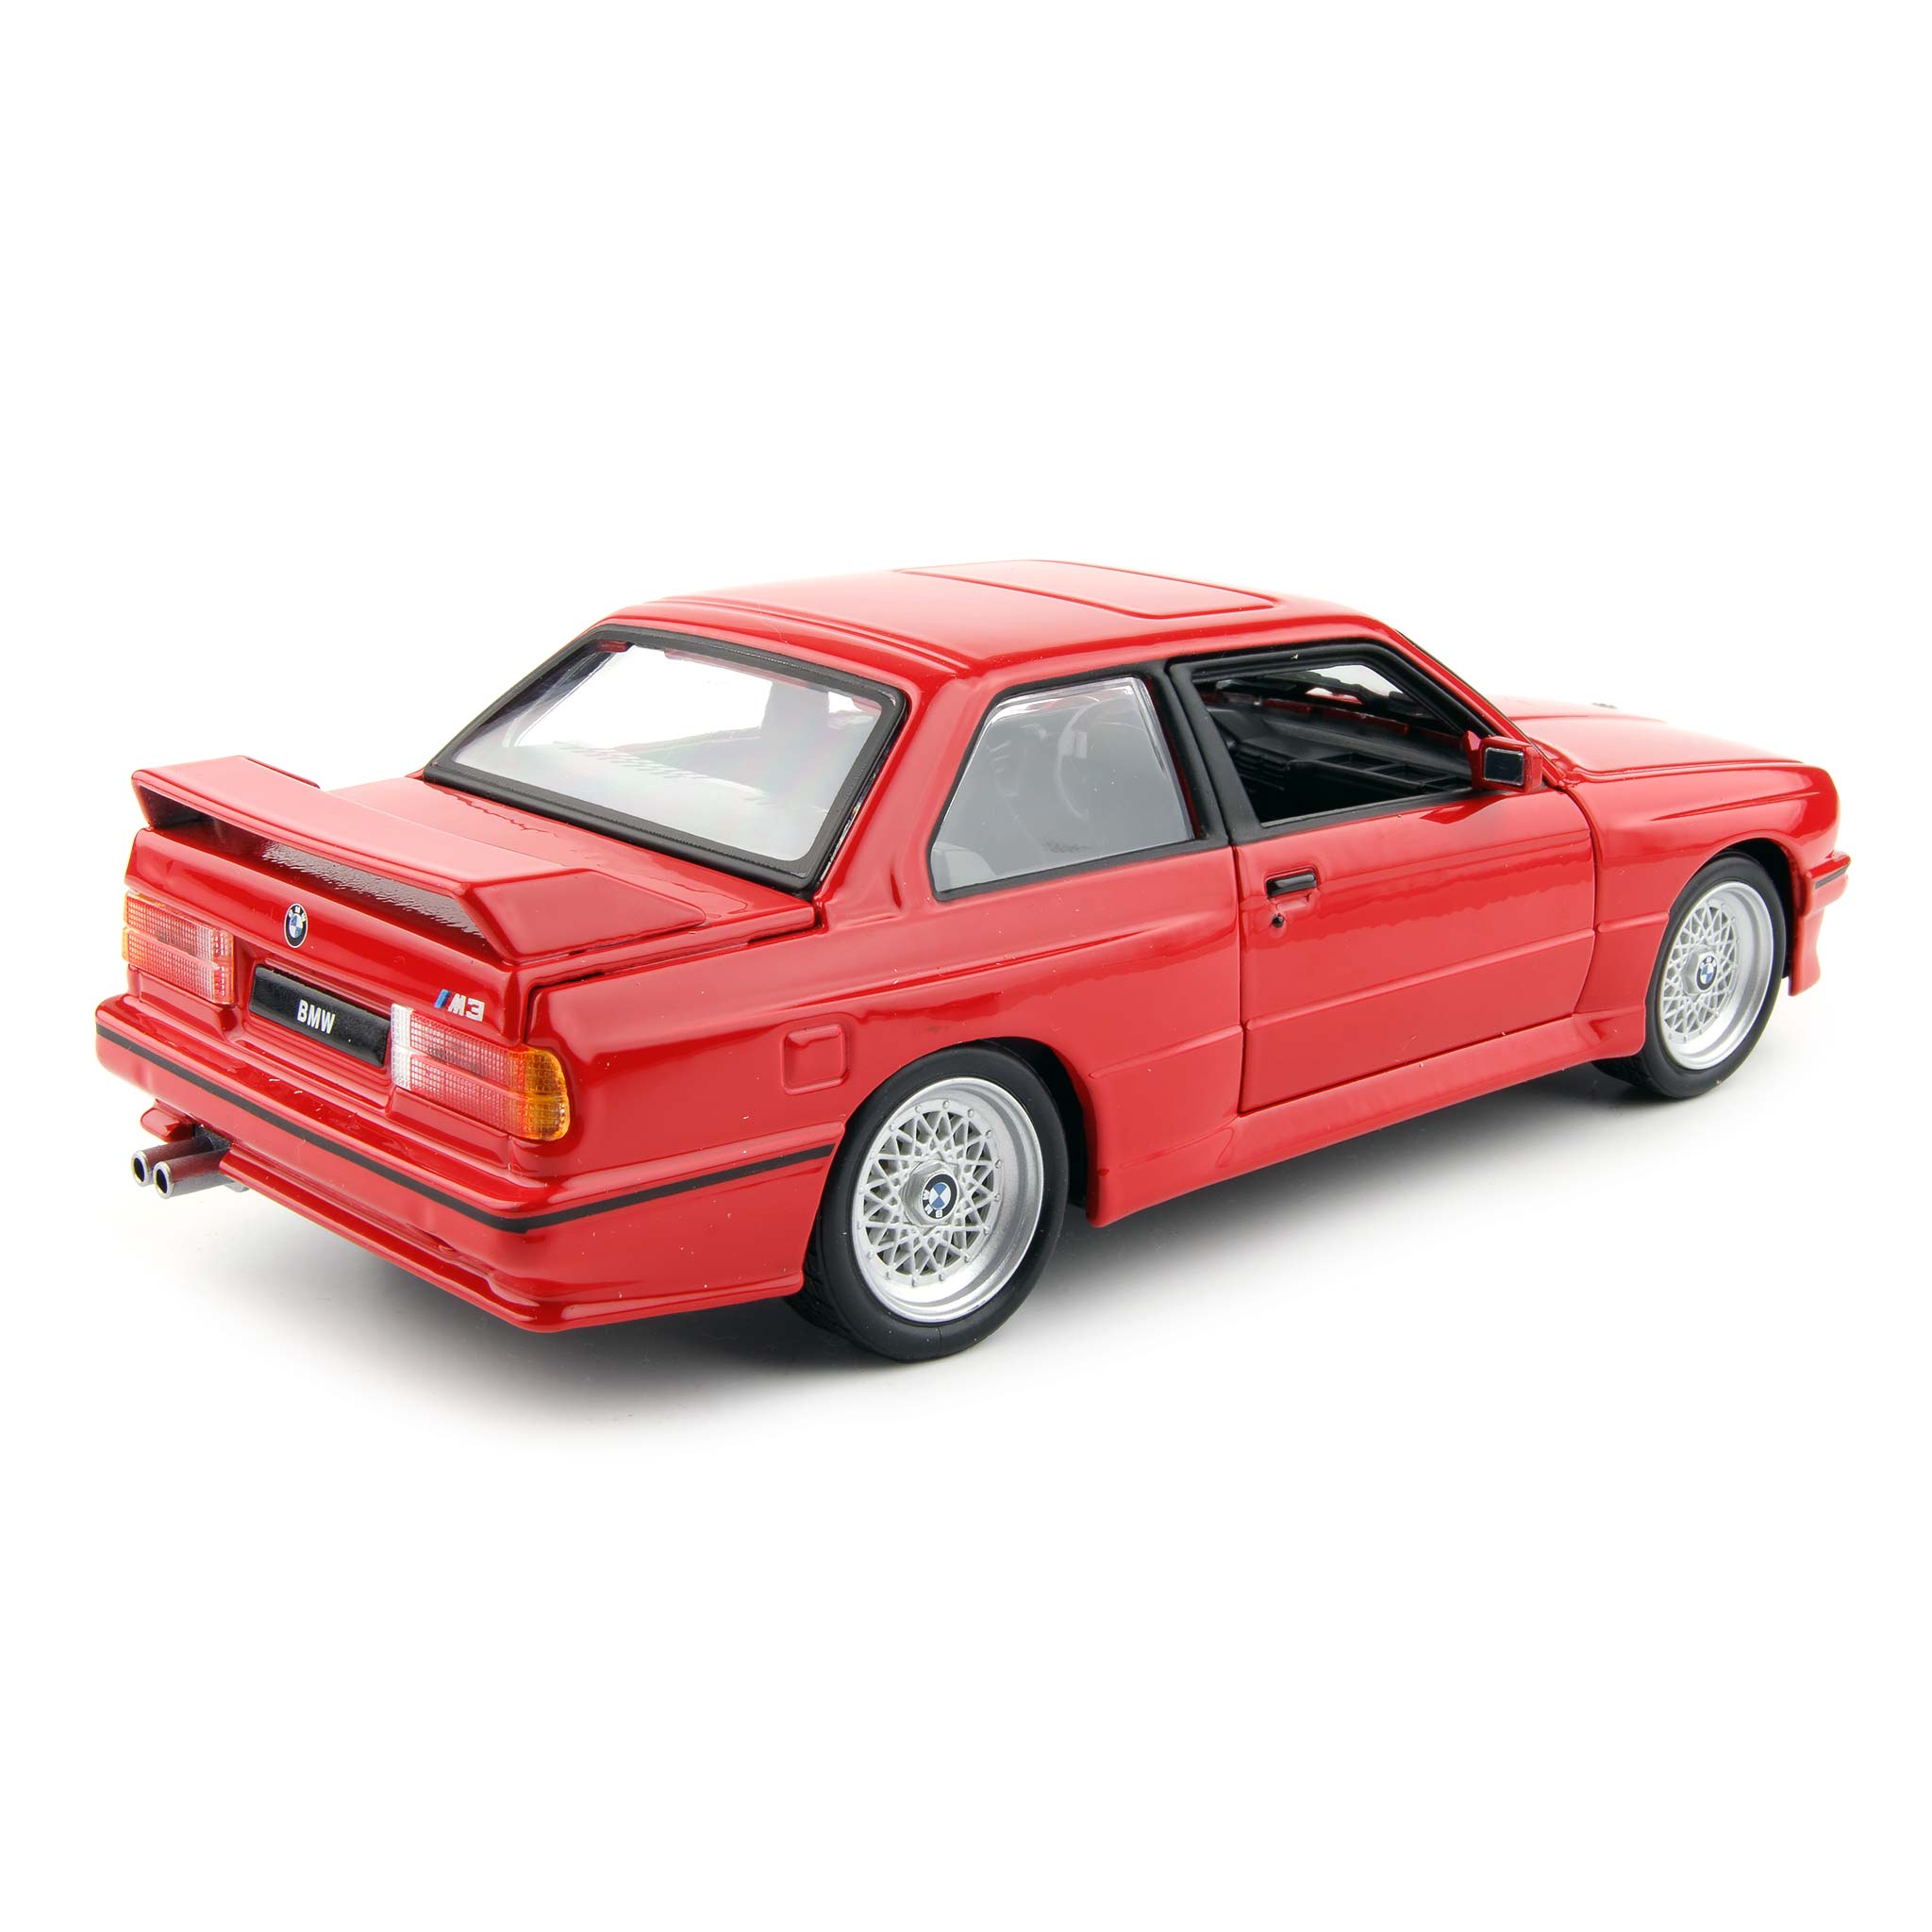 BMW M3 (E30) 1988 red - 1:24 Scale Diecast Model Car